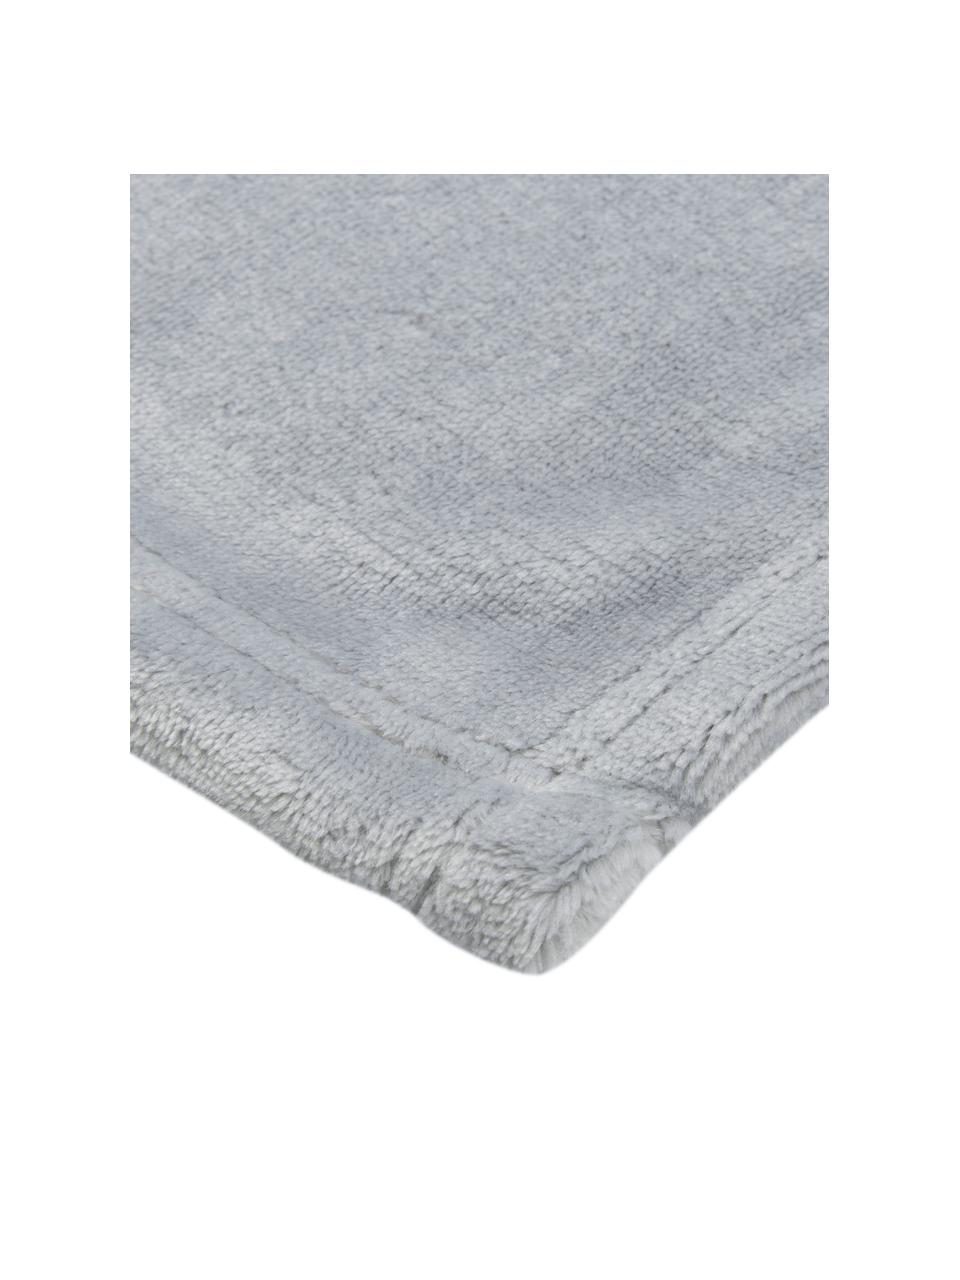 Kuscheldecke Doudou in Grau, 100% Polyester, Grau, B 130 x L 160 cm